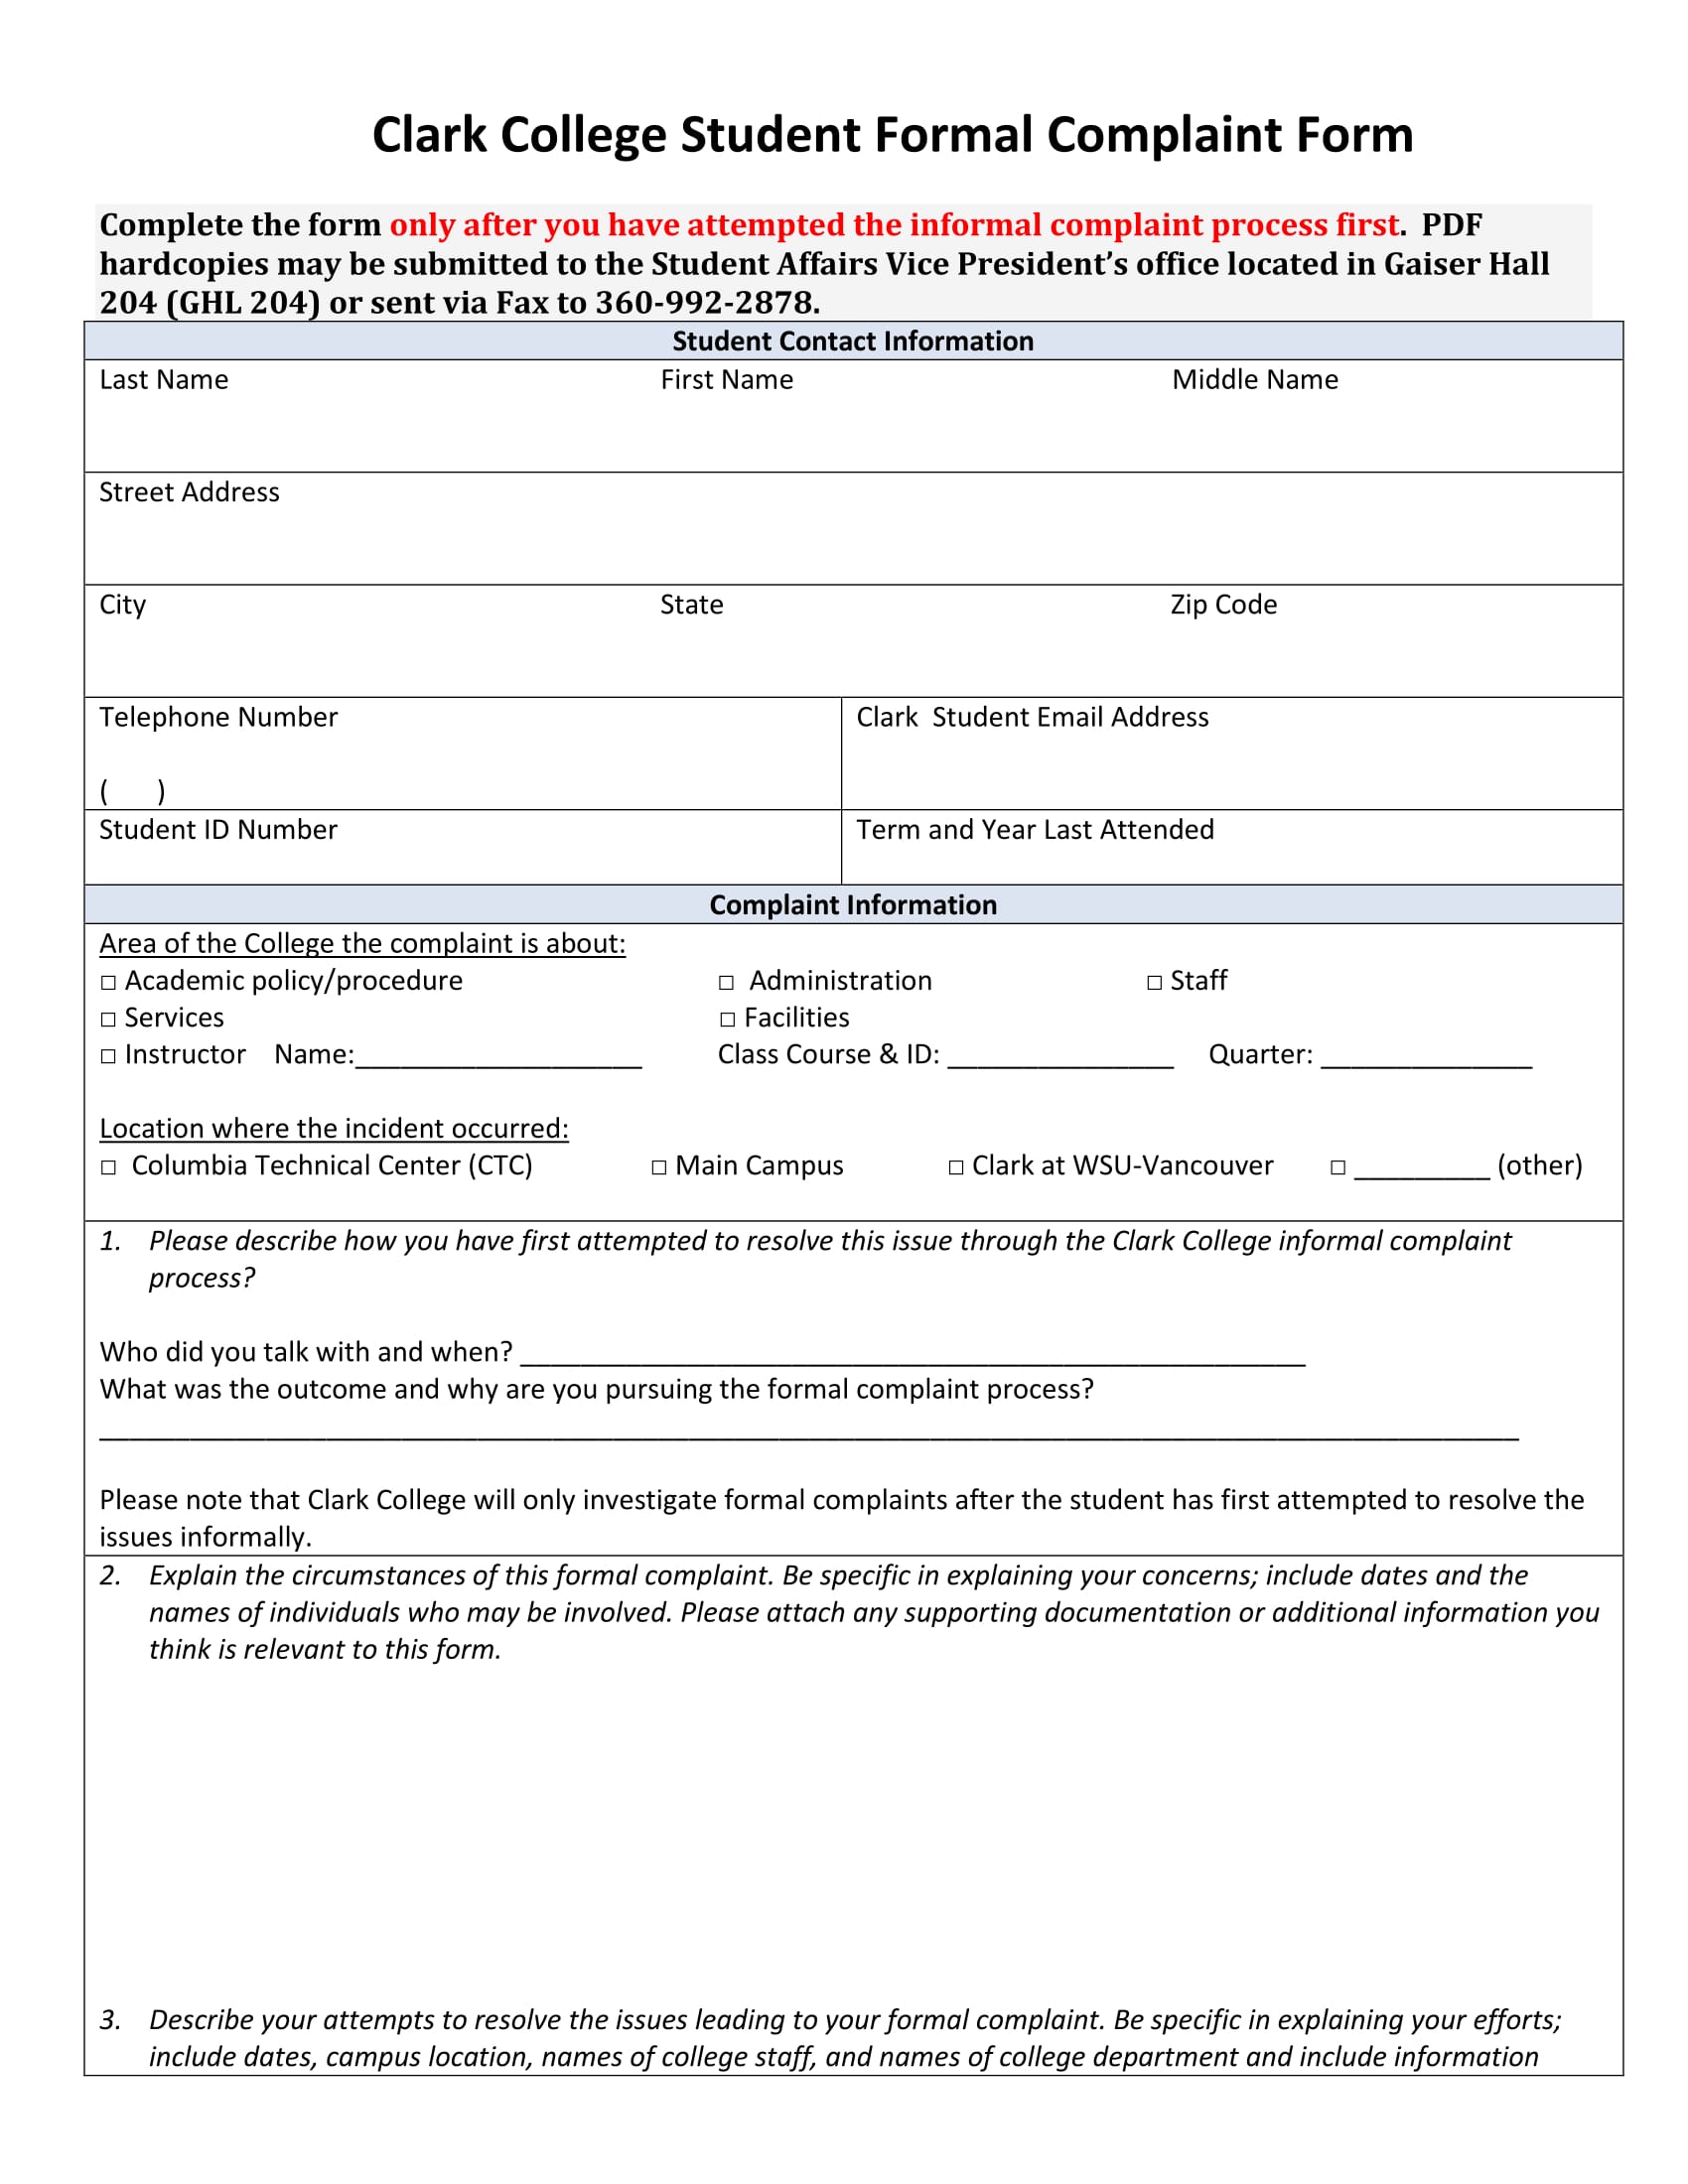 student formal complaint form 1